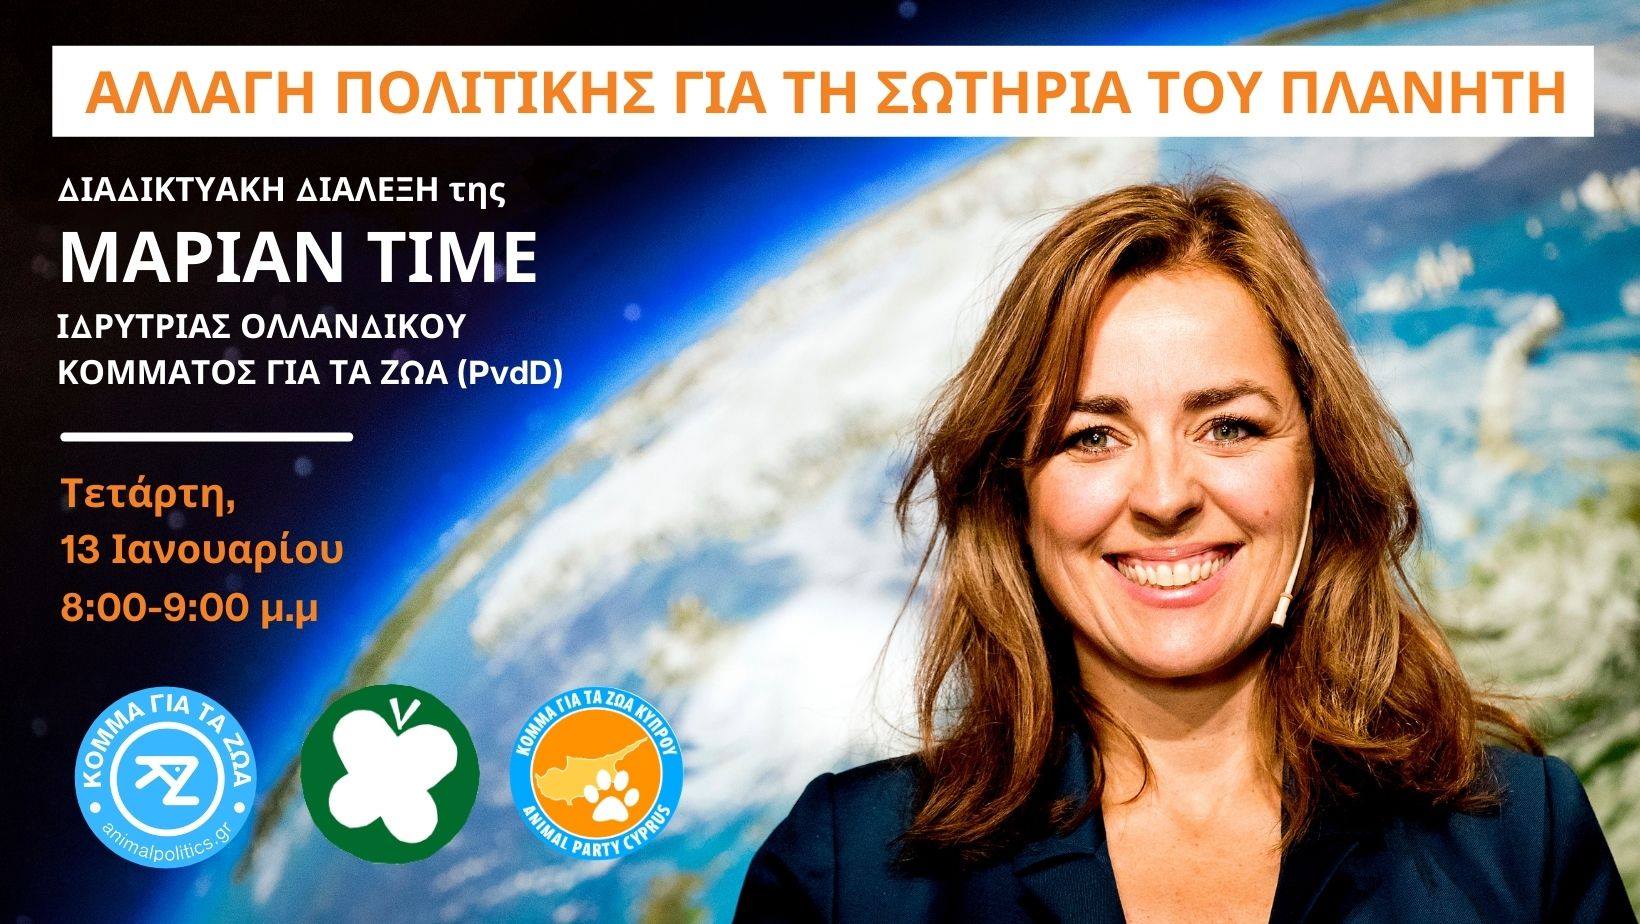 H Marianne Thieme επικοινωνεί για πρώτη φορά με το ελληνικό κοινό